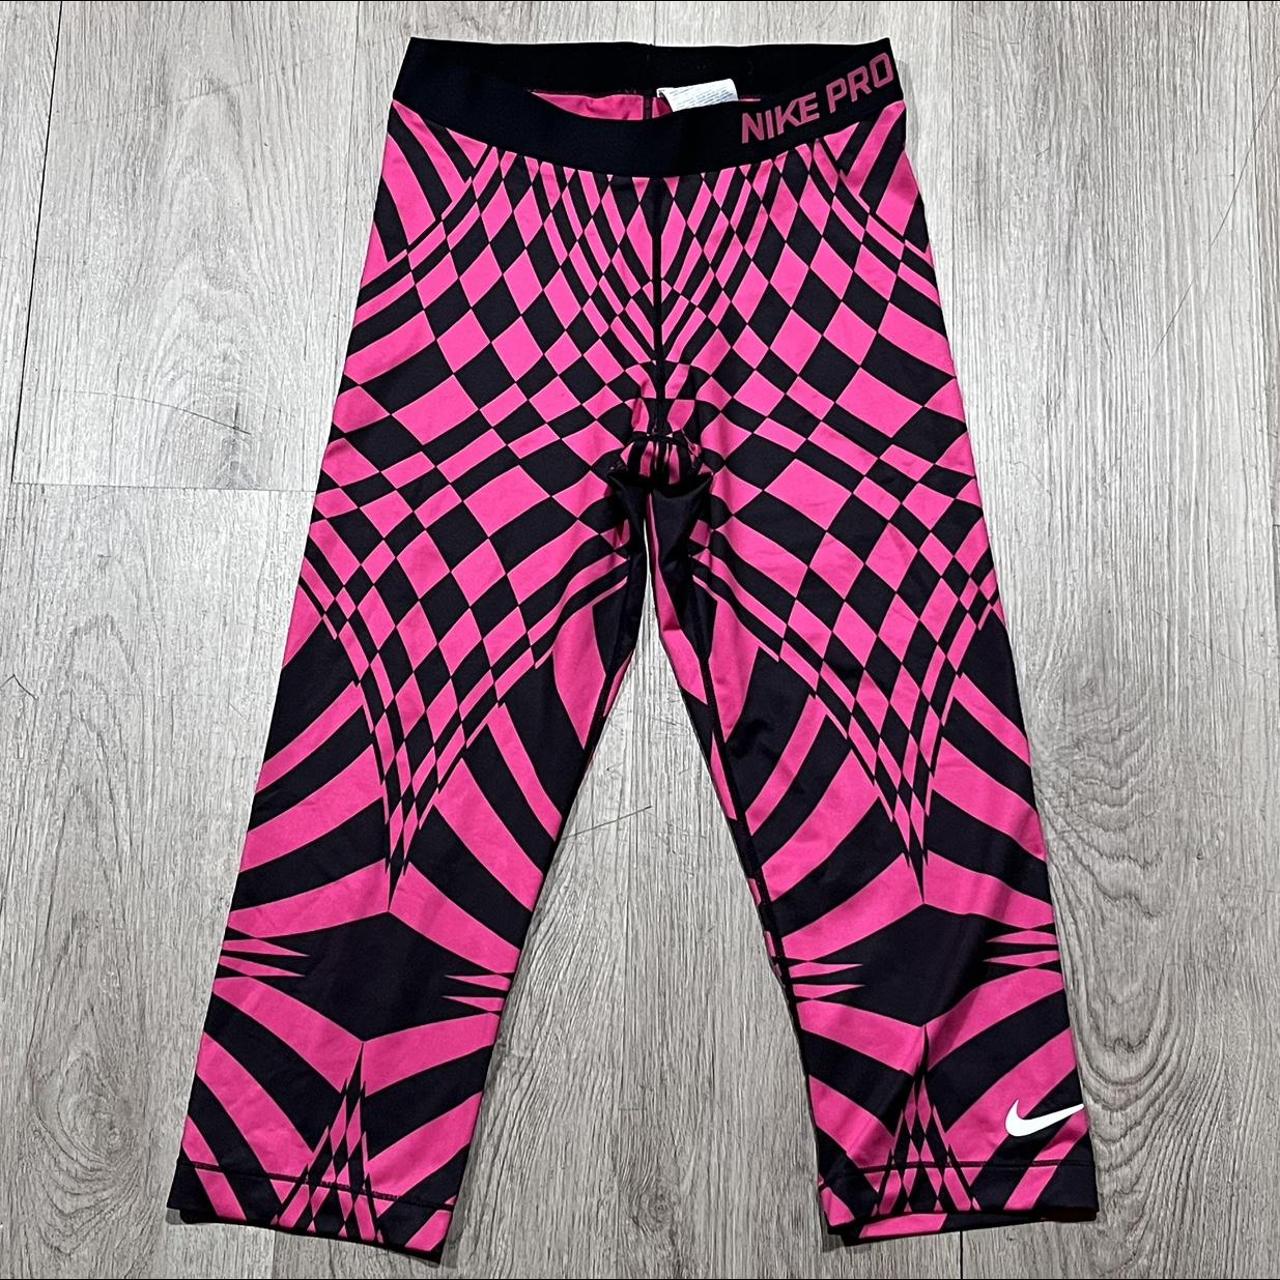 Buy Nike Pro Capri - Black/Pink